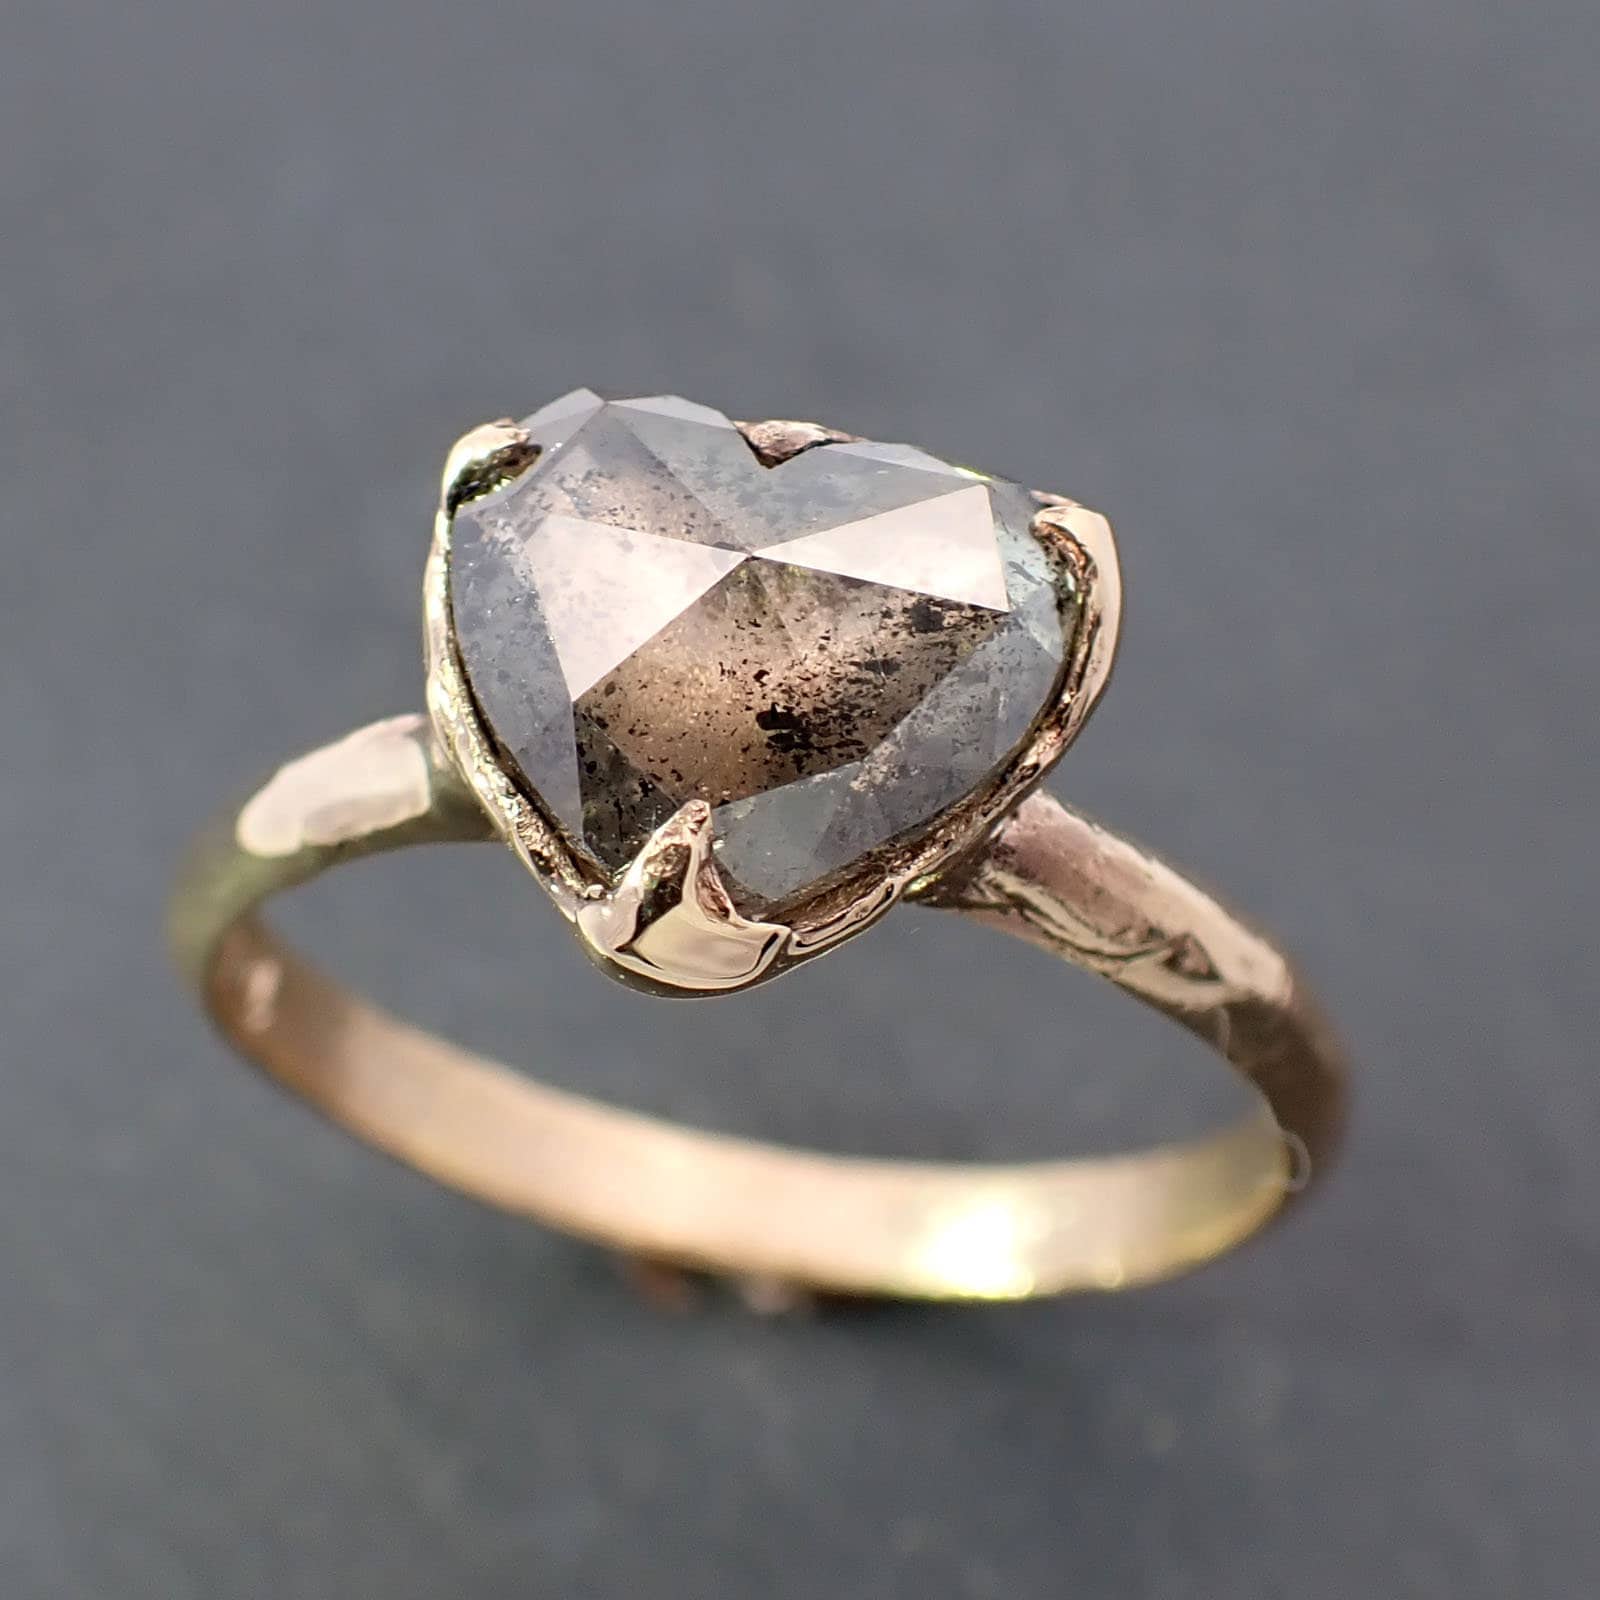 Certified 4.59 TCW heart shaped diamond ring -